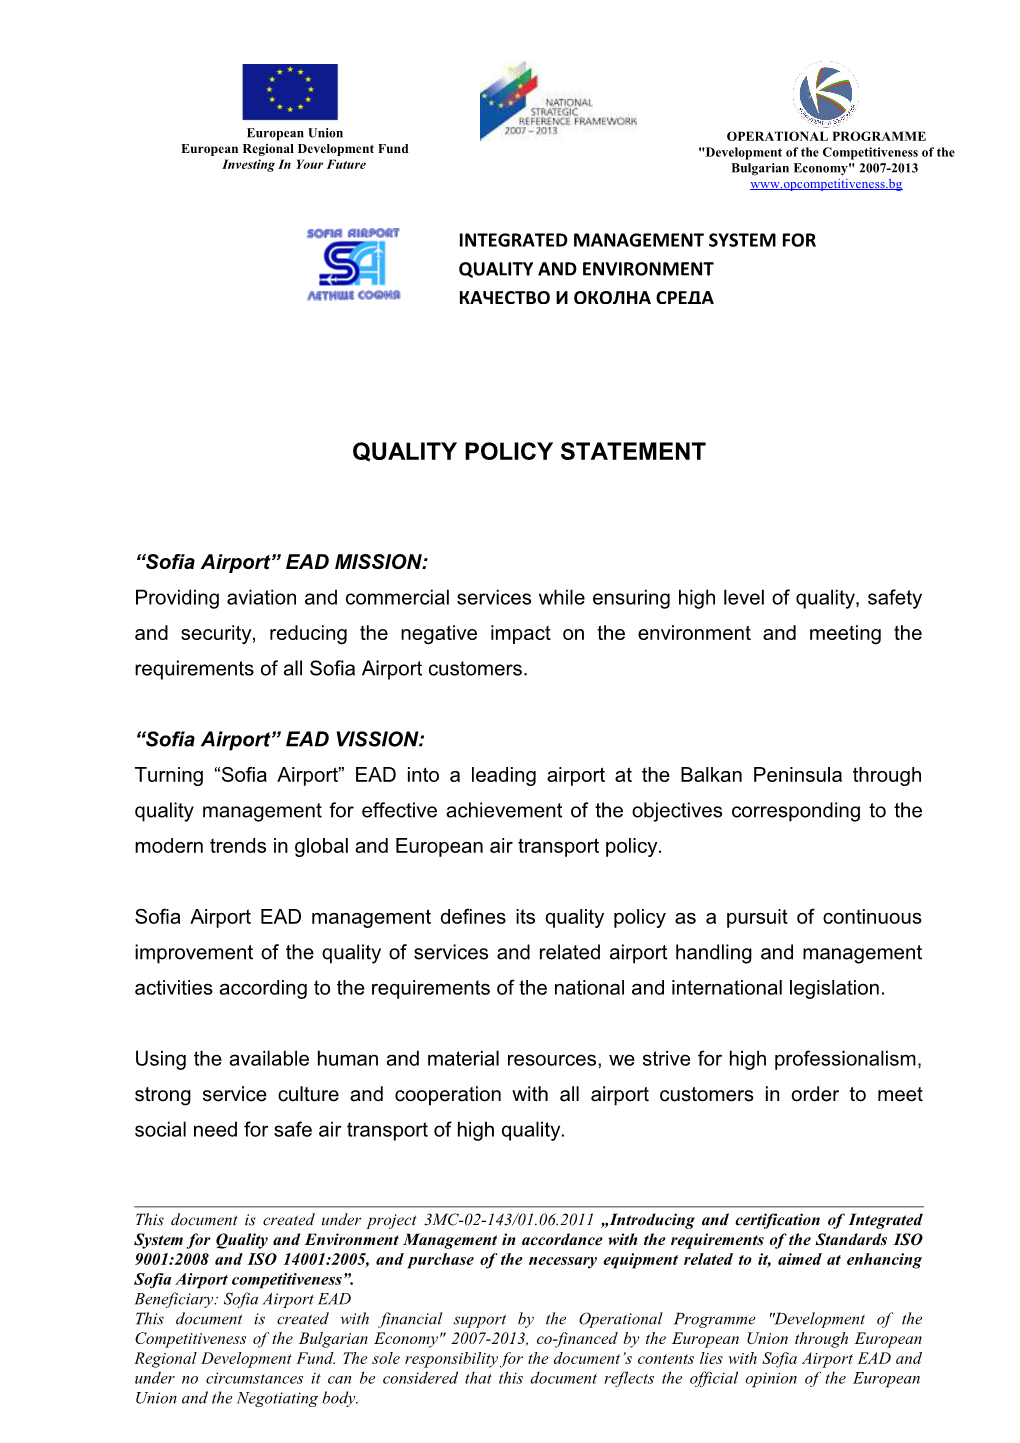 Quality Policy Statement